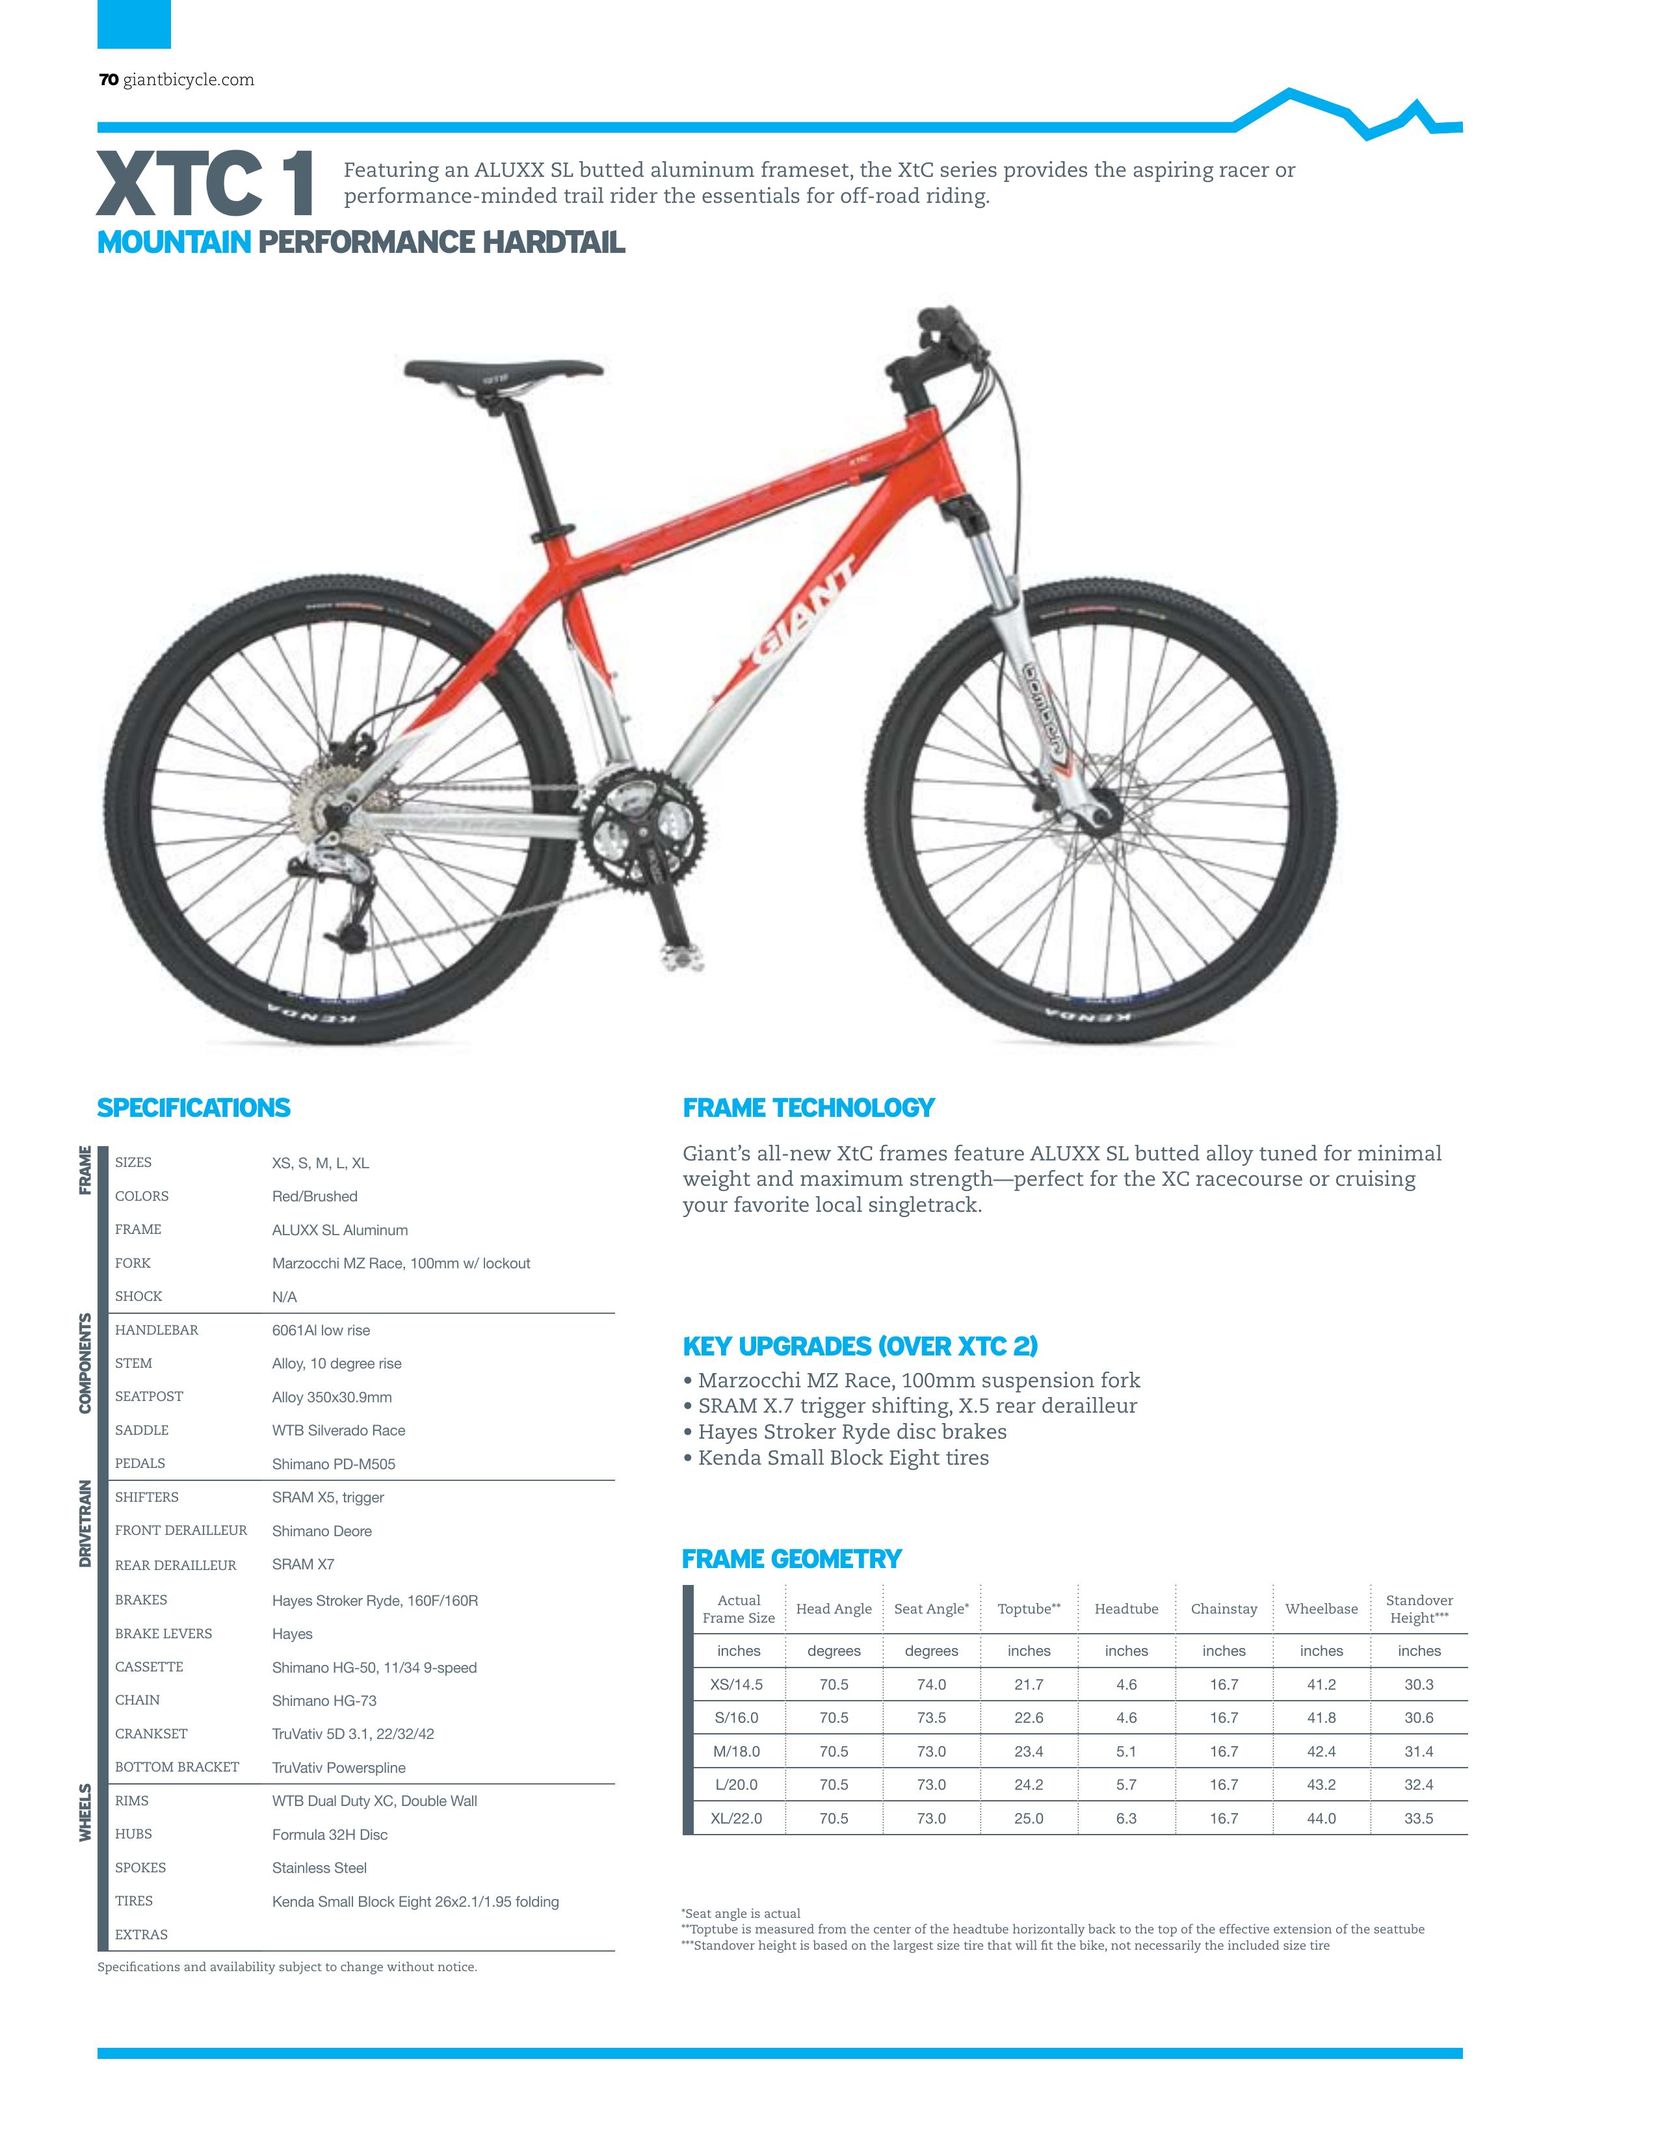 Giant XTC 1 Bicycle User Manual